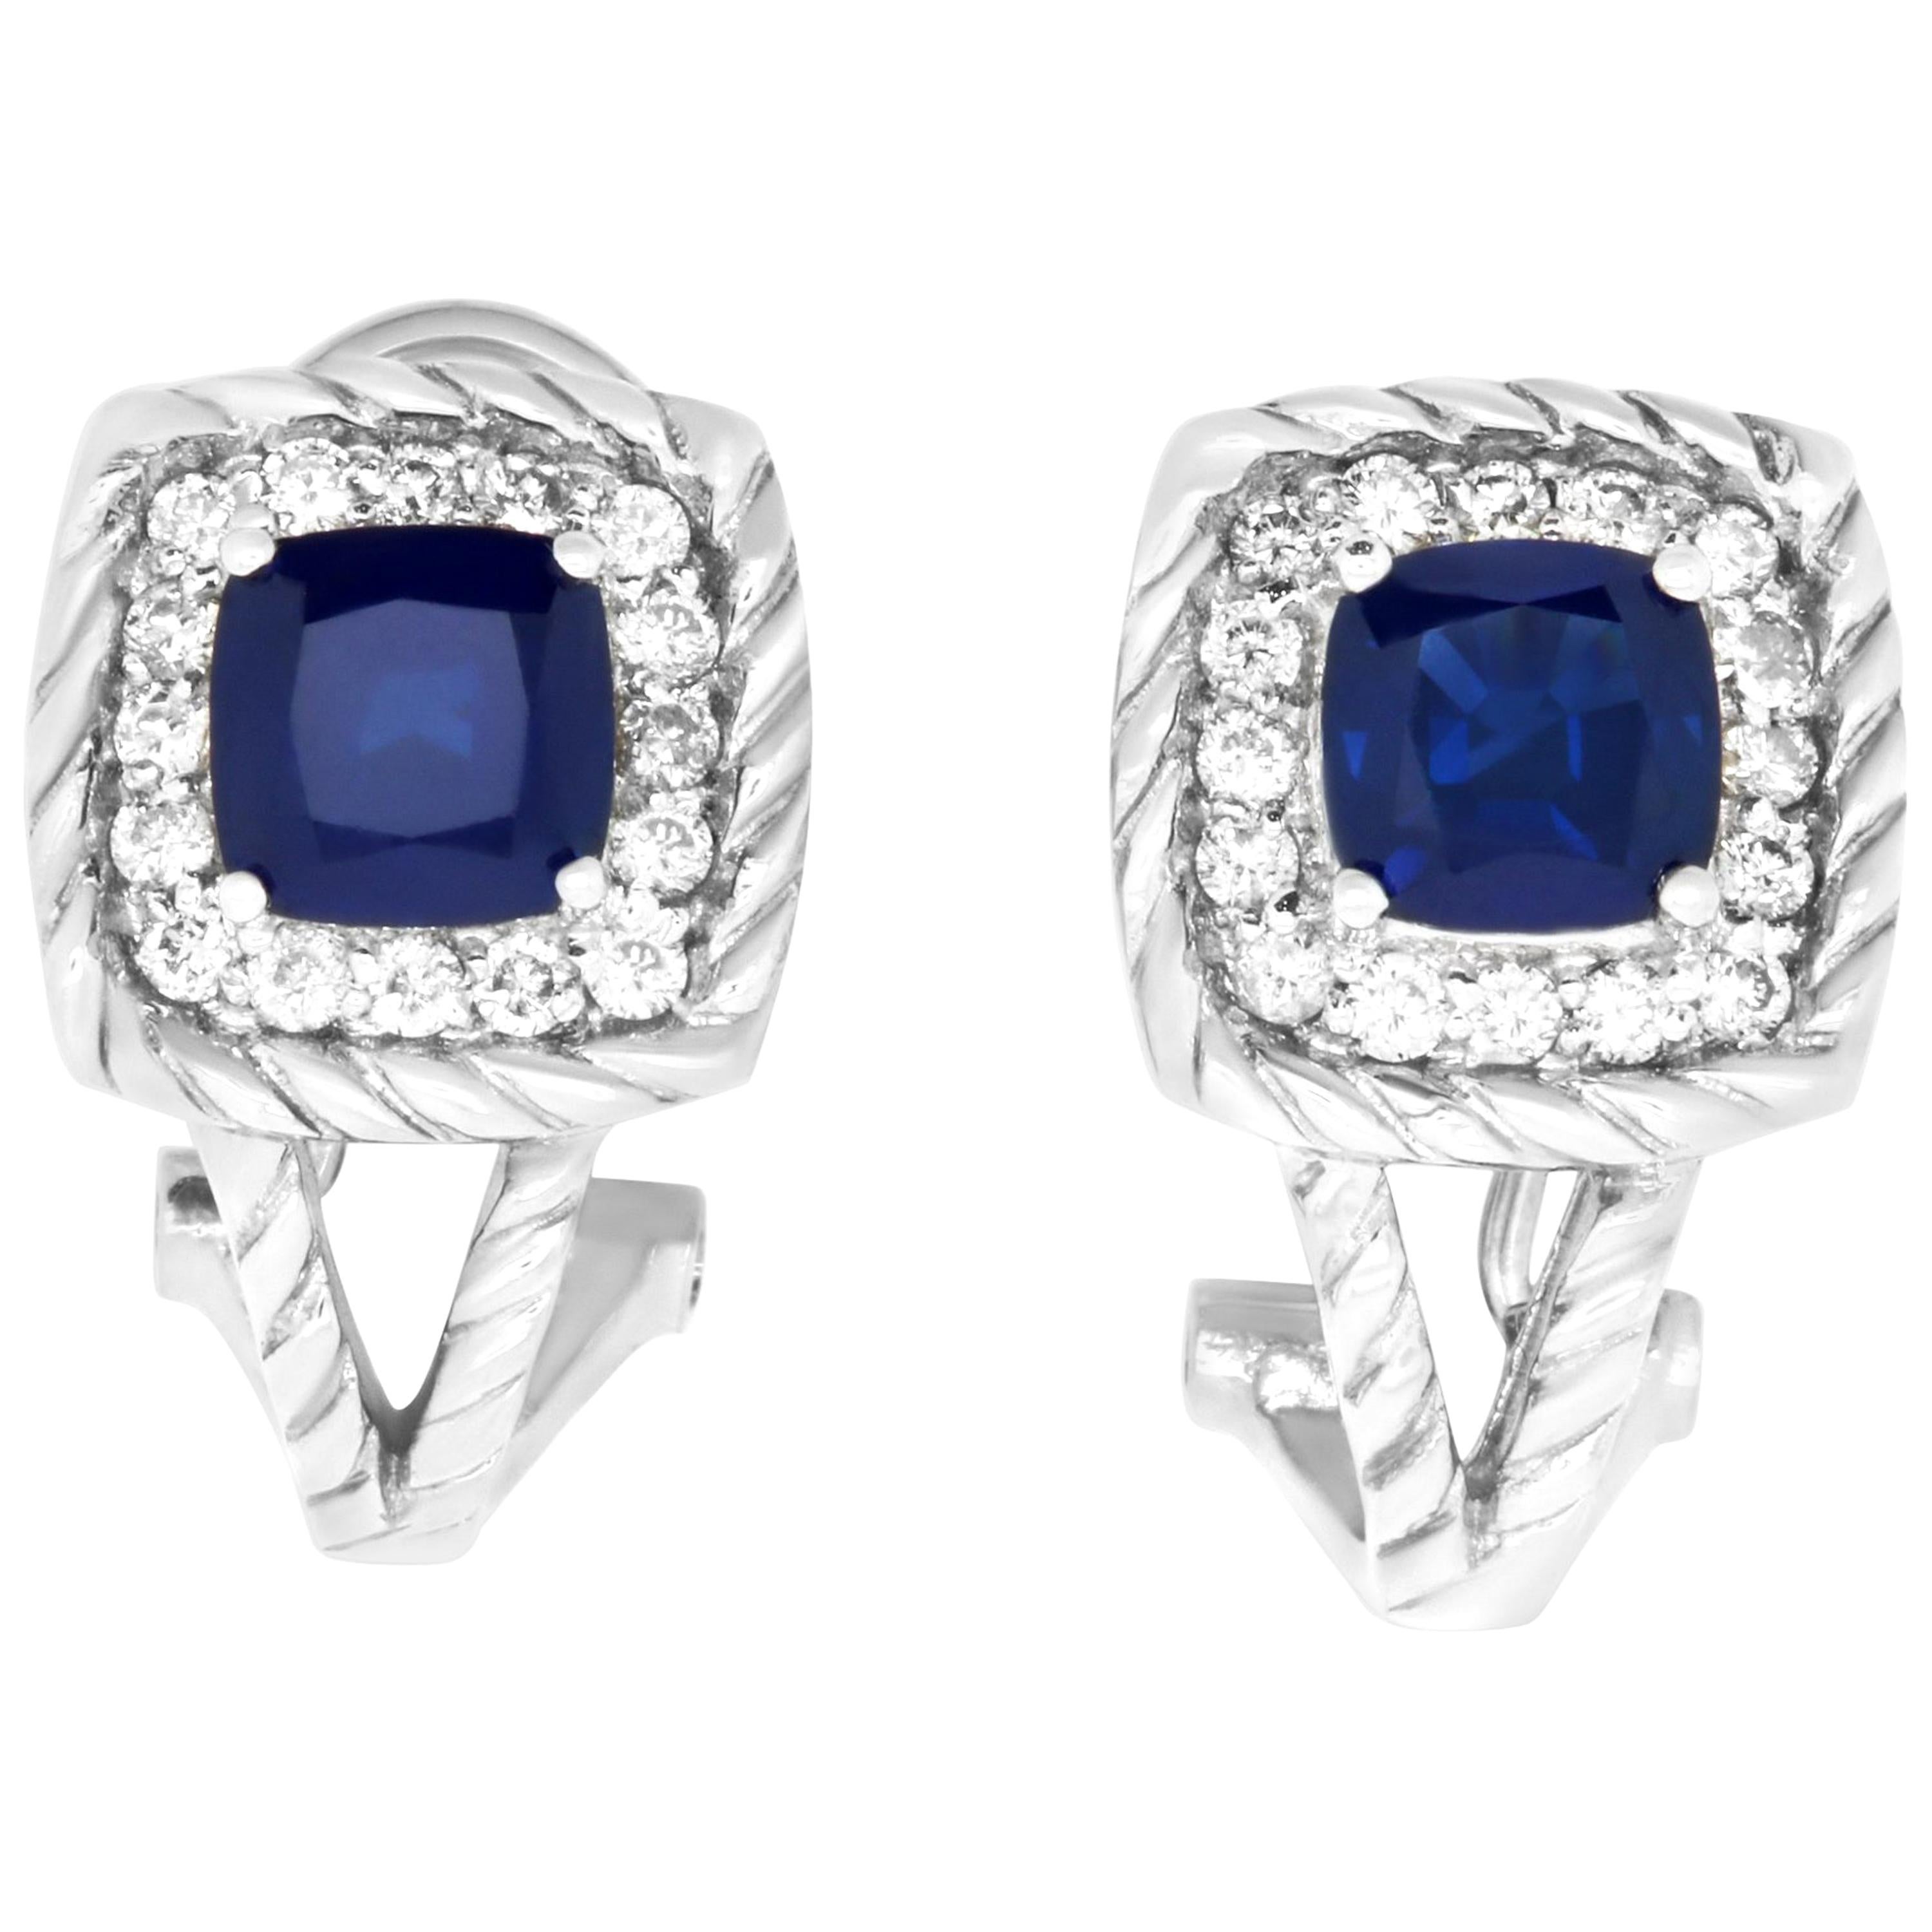 2.95 Carat Cushion Cut Blue Sapphire and .55 Carat Diamond Earrings